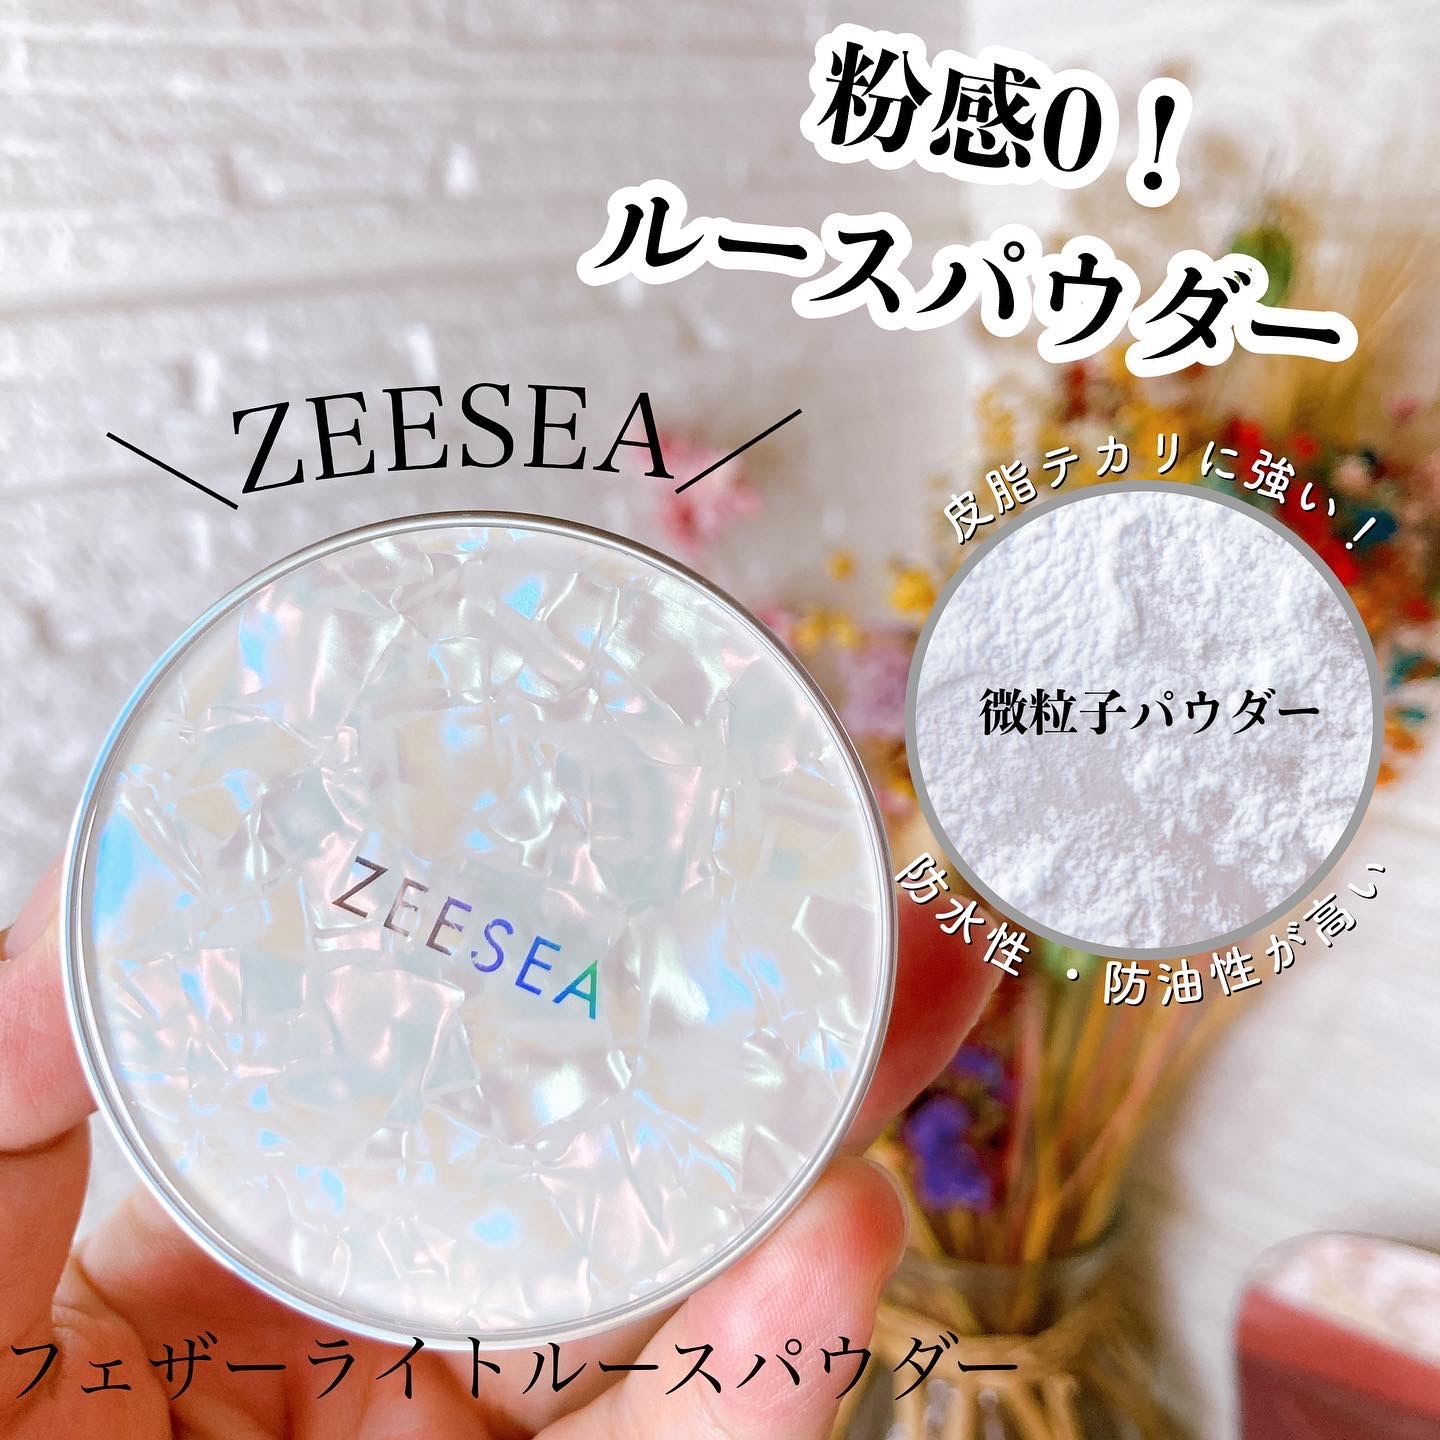 ZEESEA(ズーシー) フェザーライトルースパウダーの良い点・メリットに関するメグさんの口コミ画像1